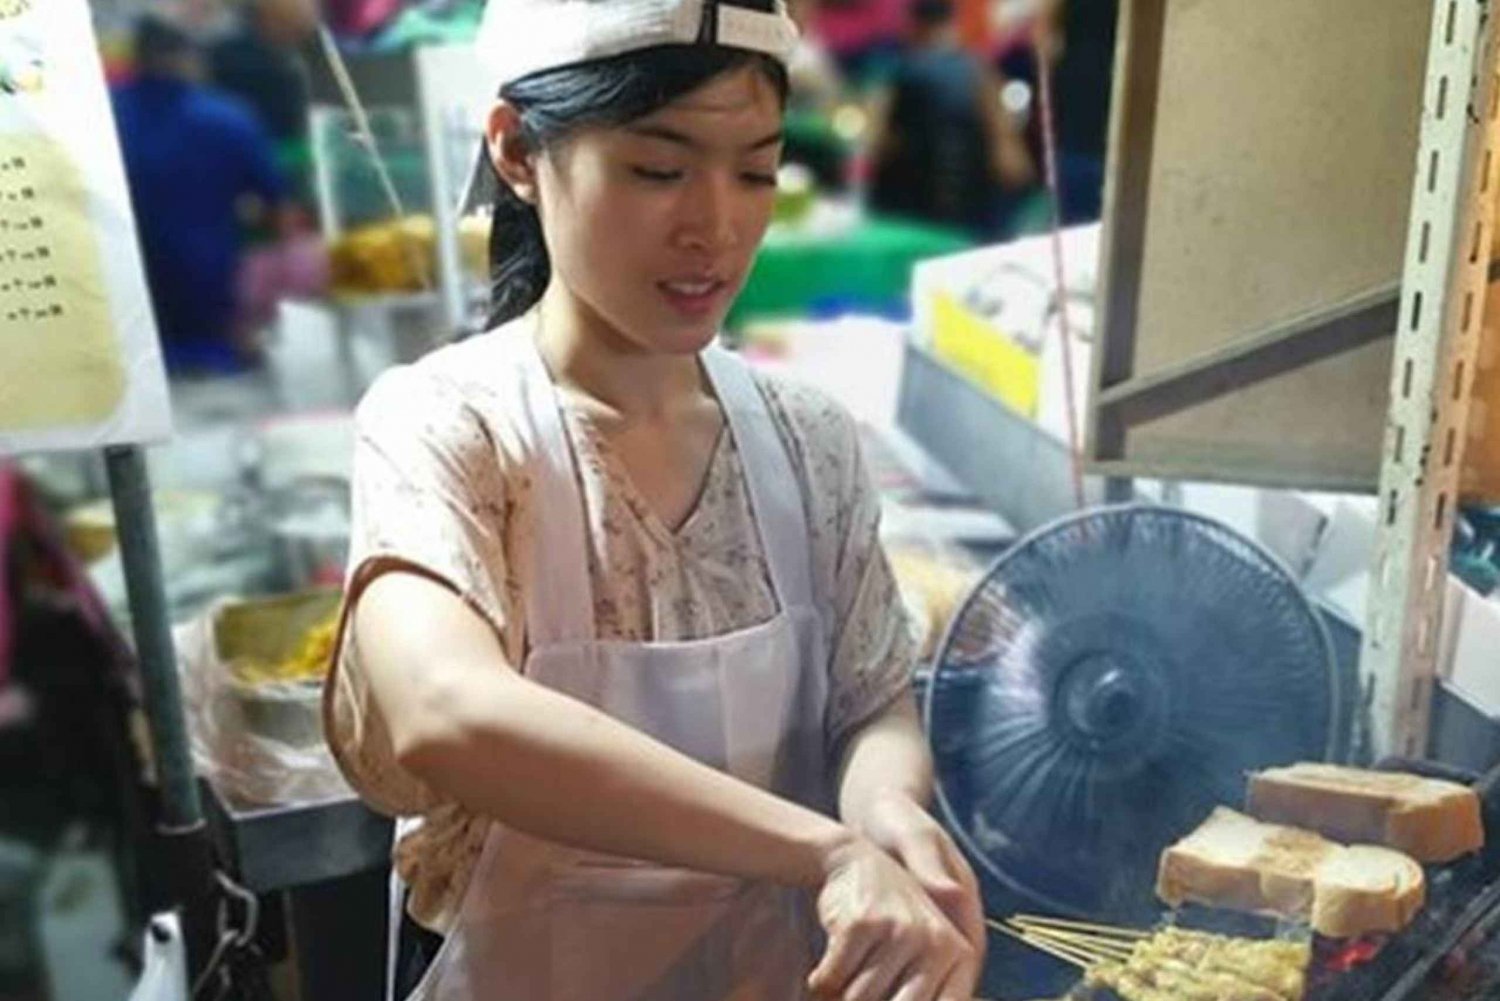 Bangkok: Street Food Proeverij Tour bij nacht